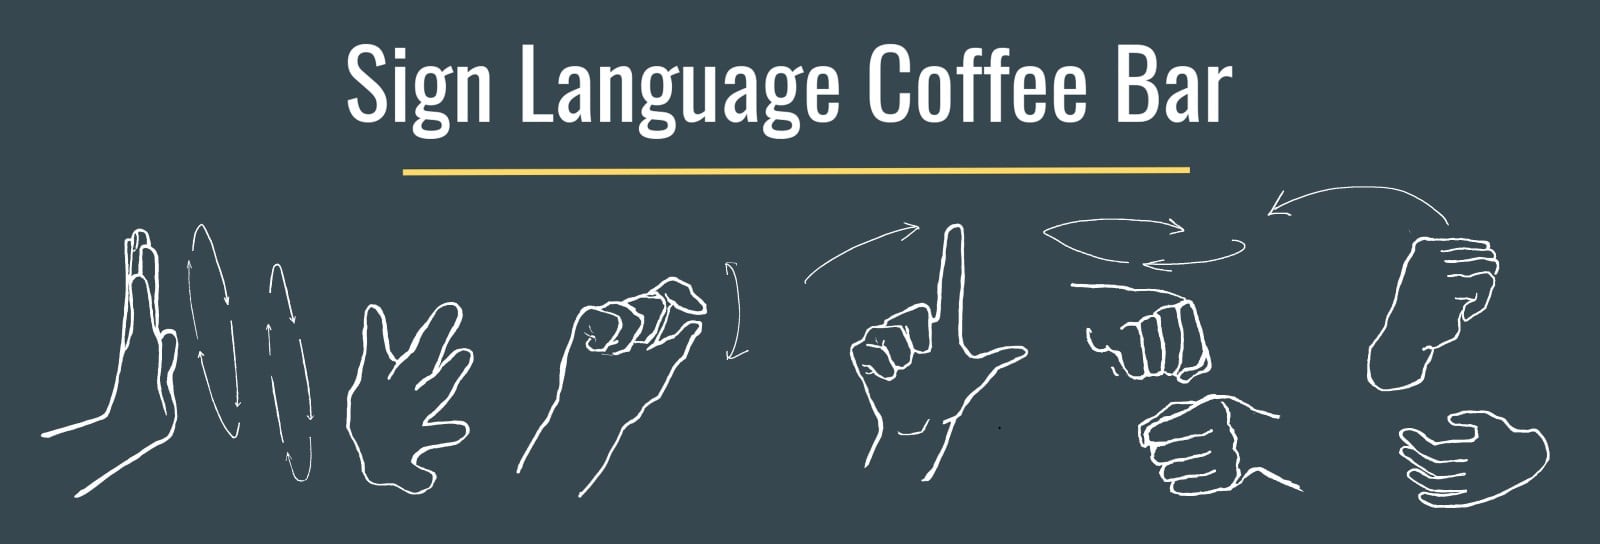 Sign Language Coffee Bar